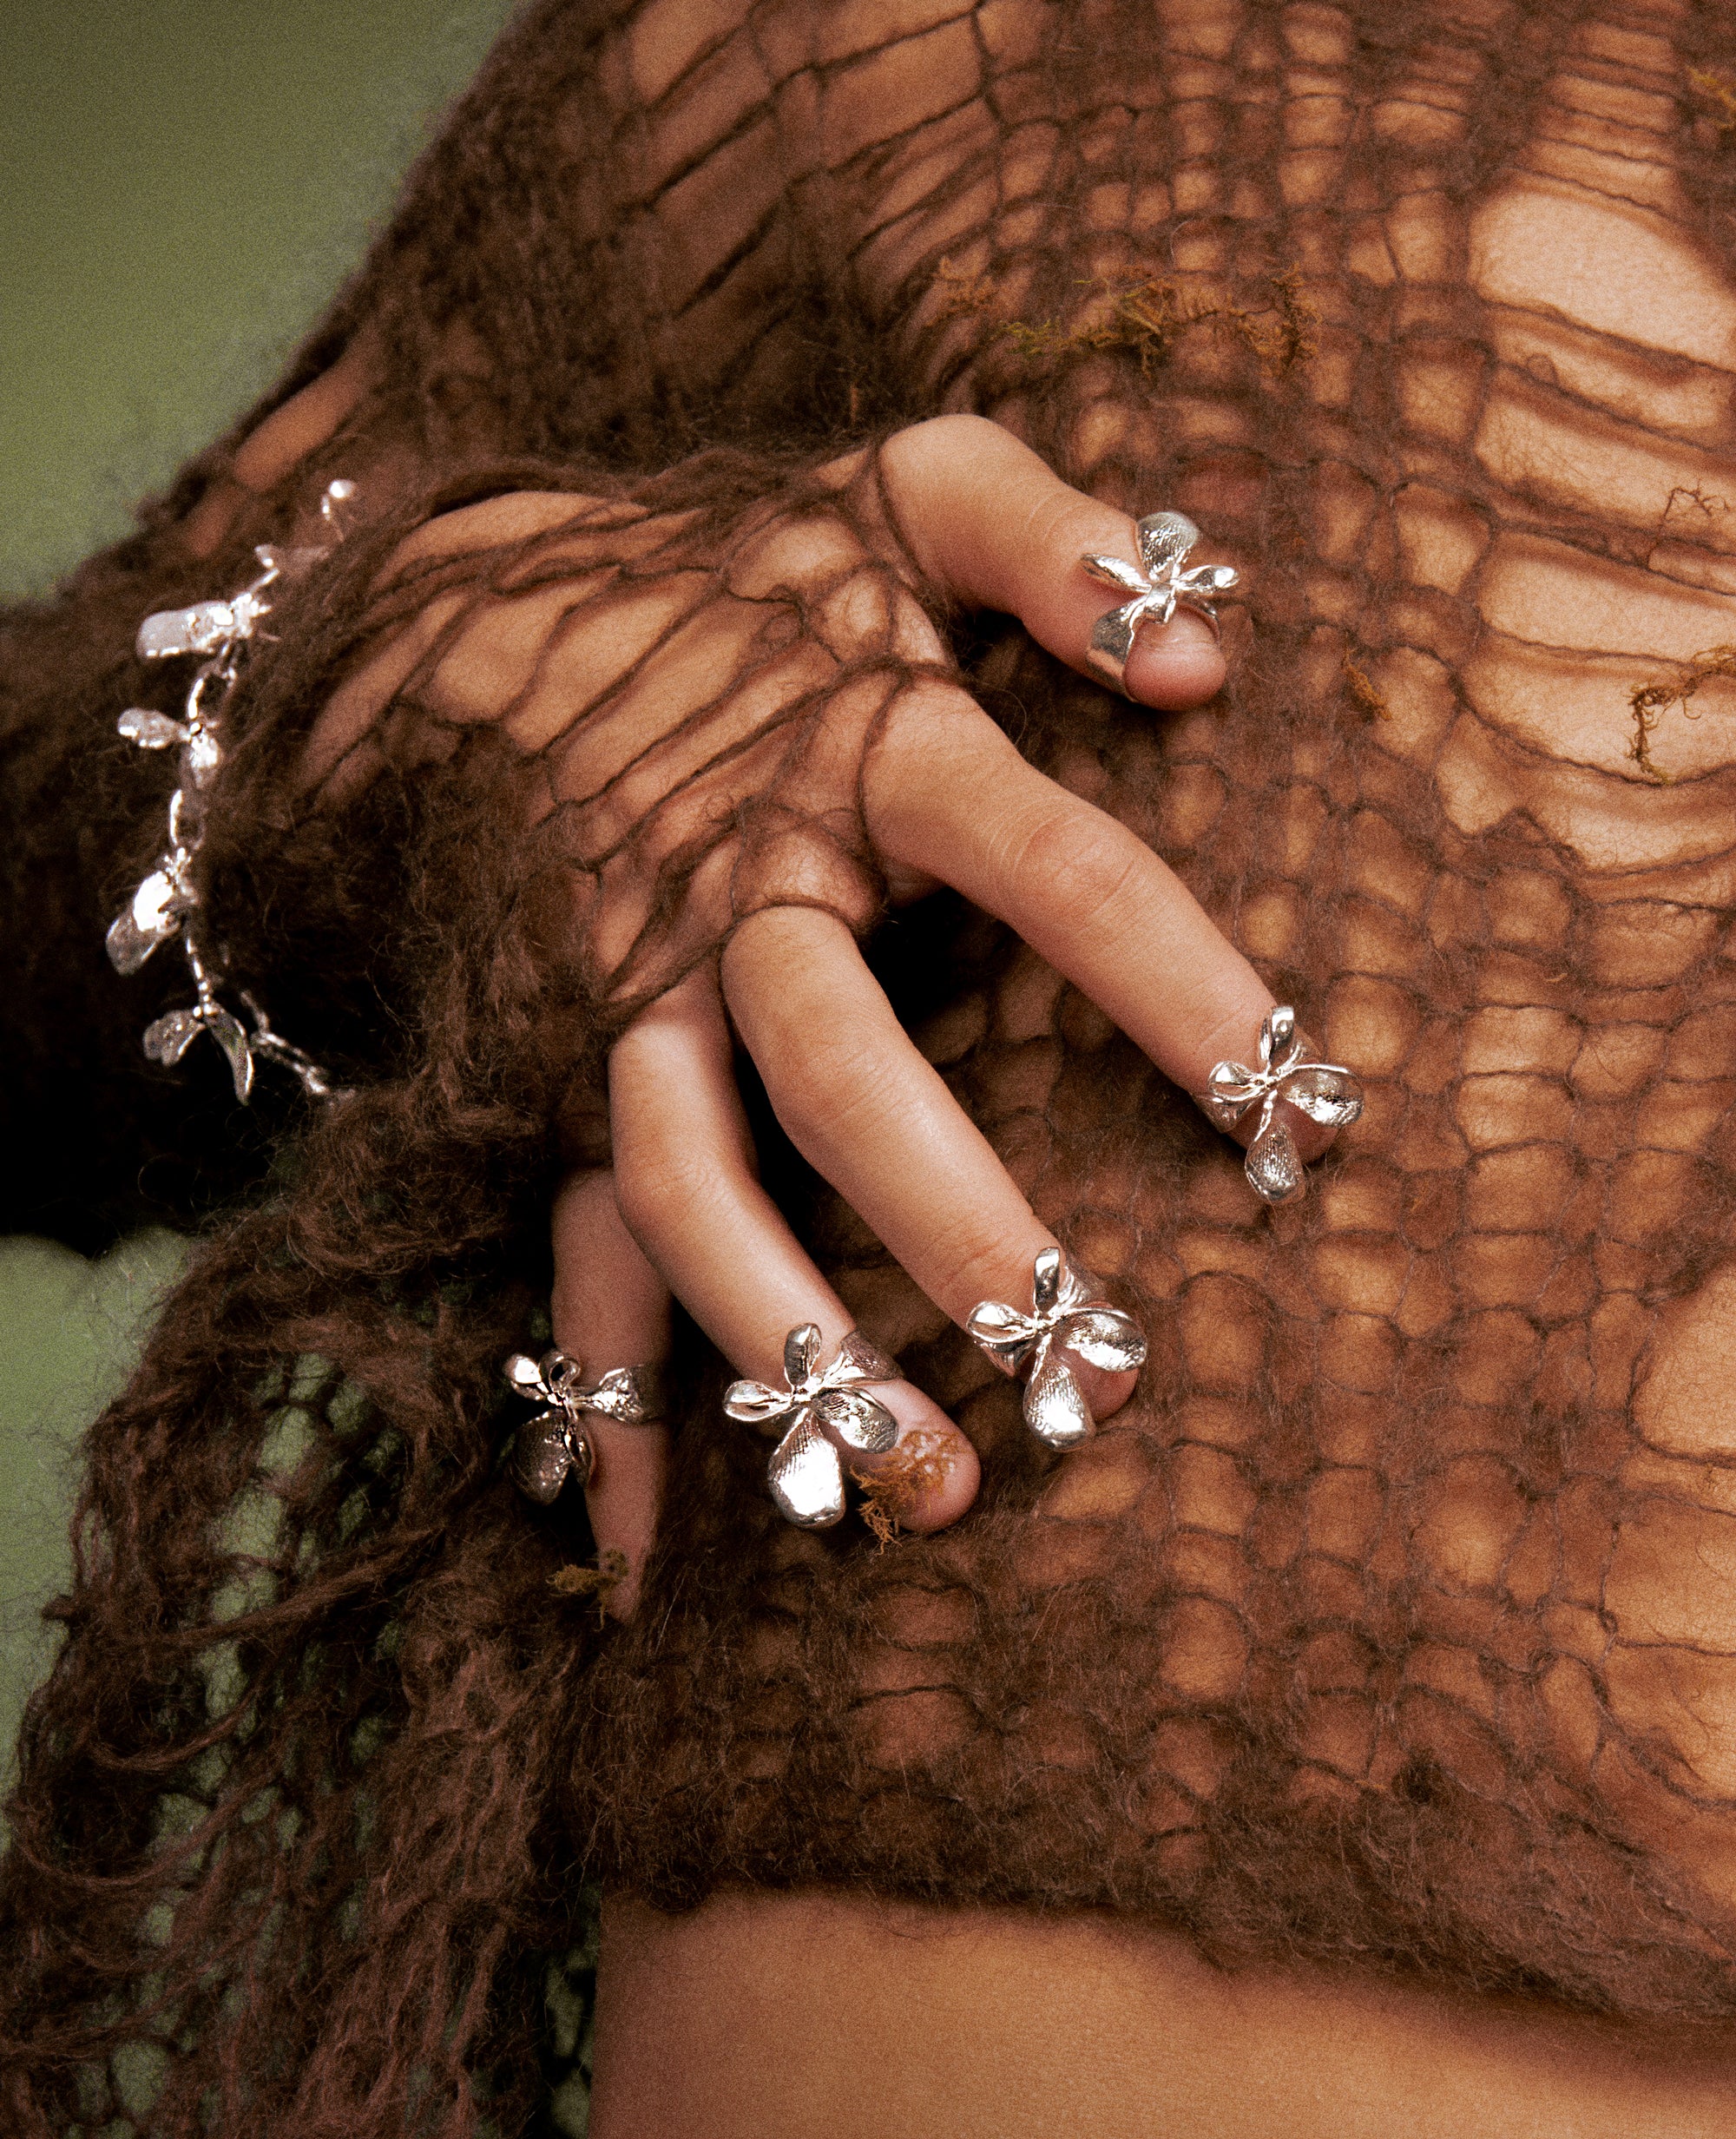 FLORALIS ARMLET // silver bracelet - ORA-C jewelry - handmade jewelry by Montreal based independent designer Caroline Pham